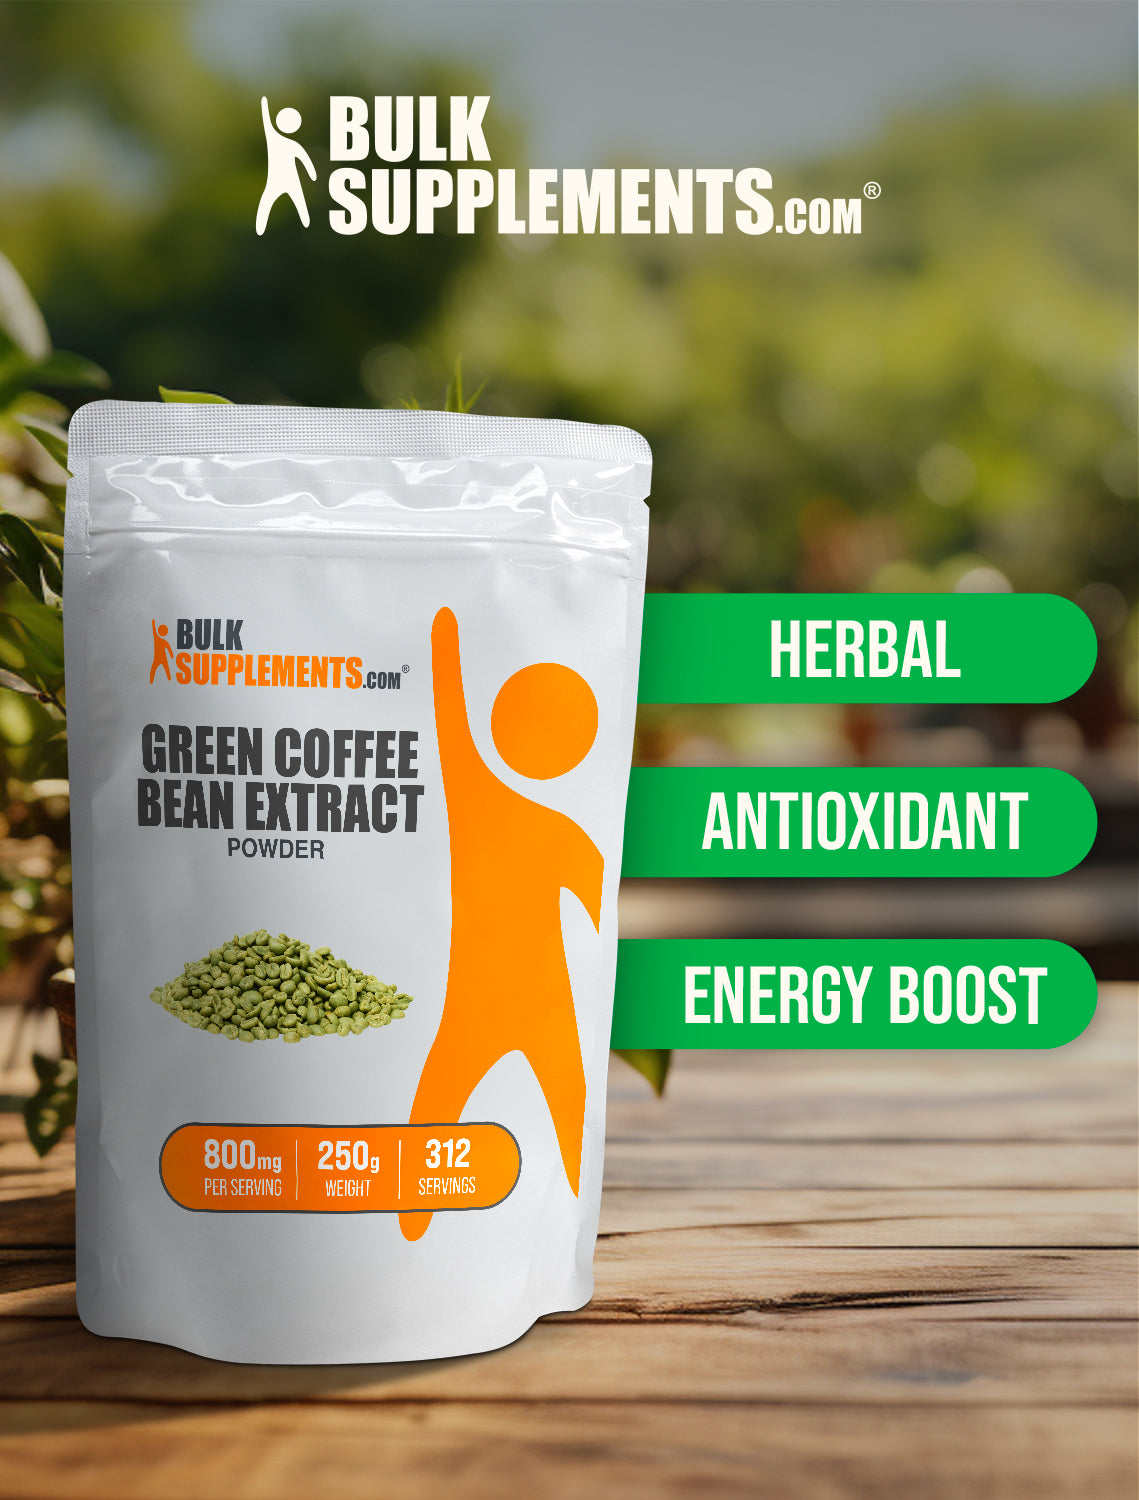 Green Coffee Bean extract powder keyword image 250g